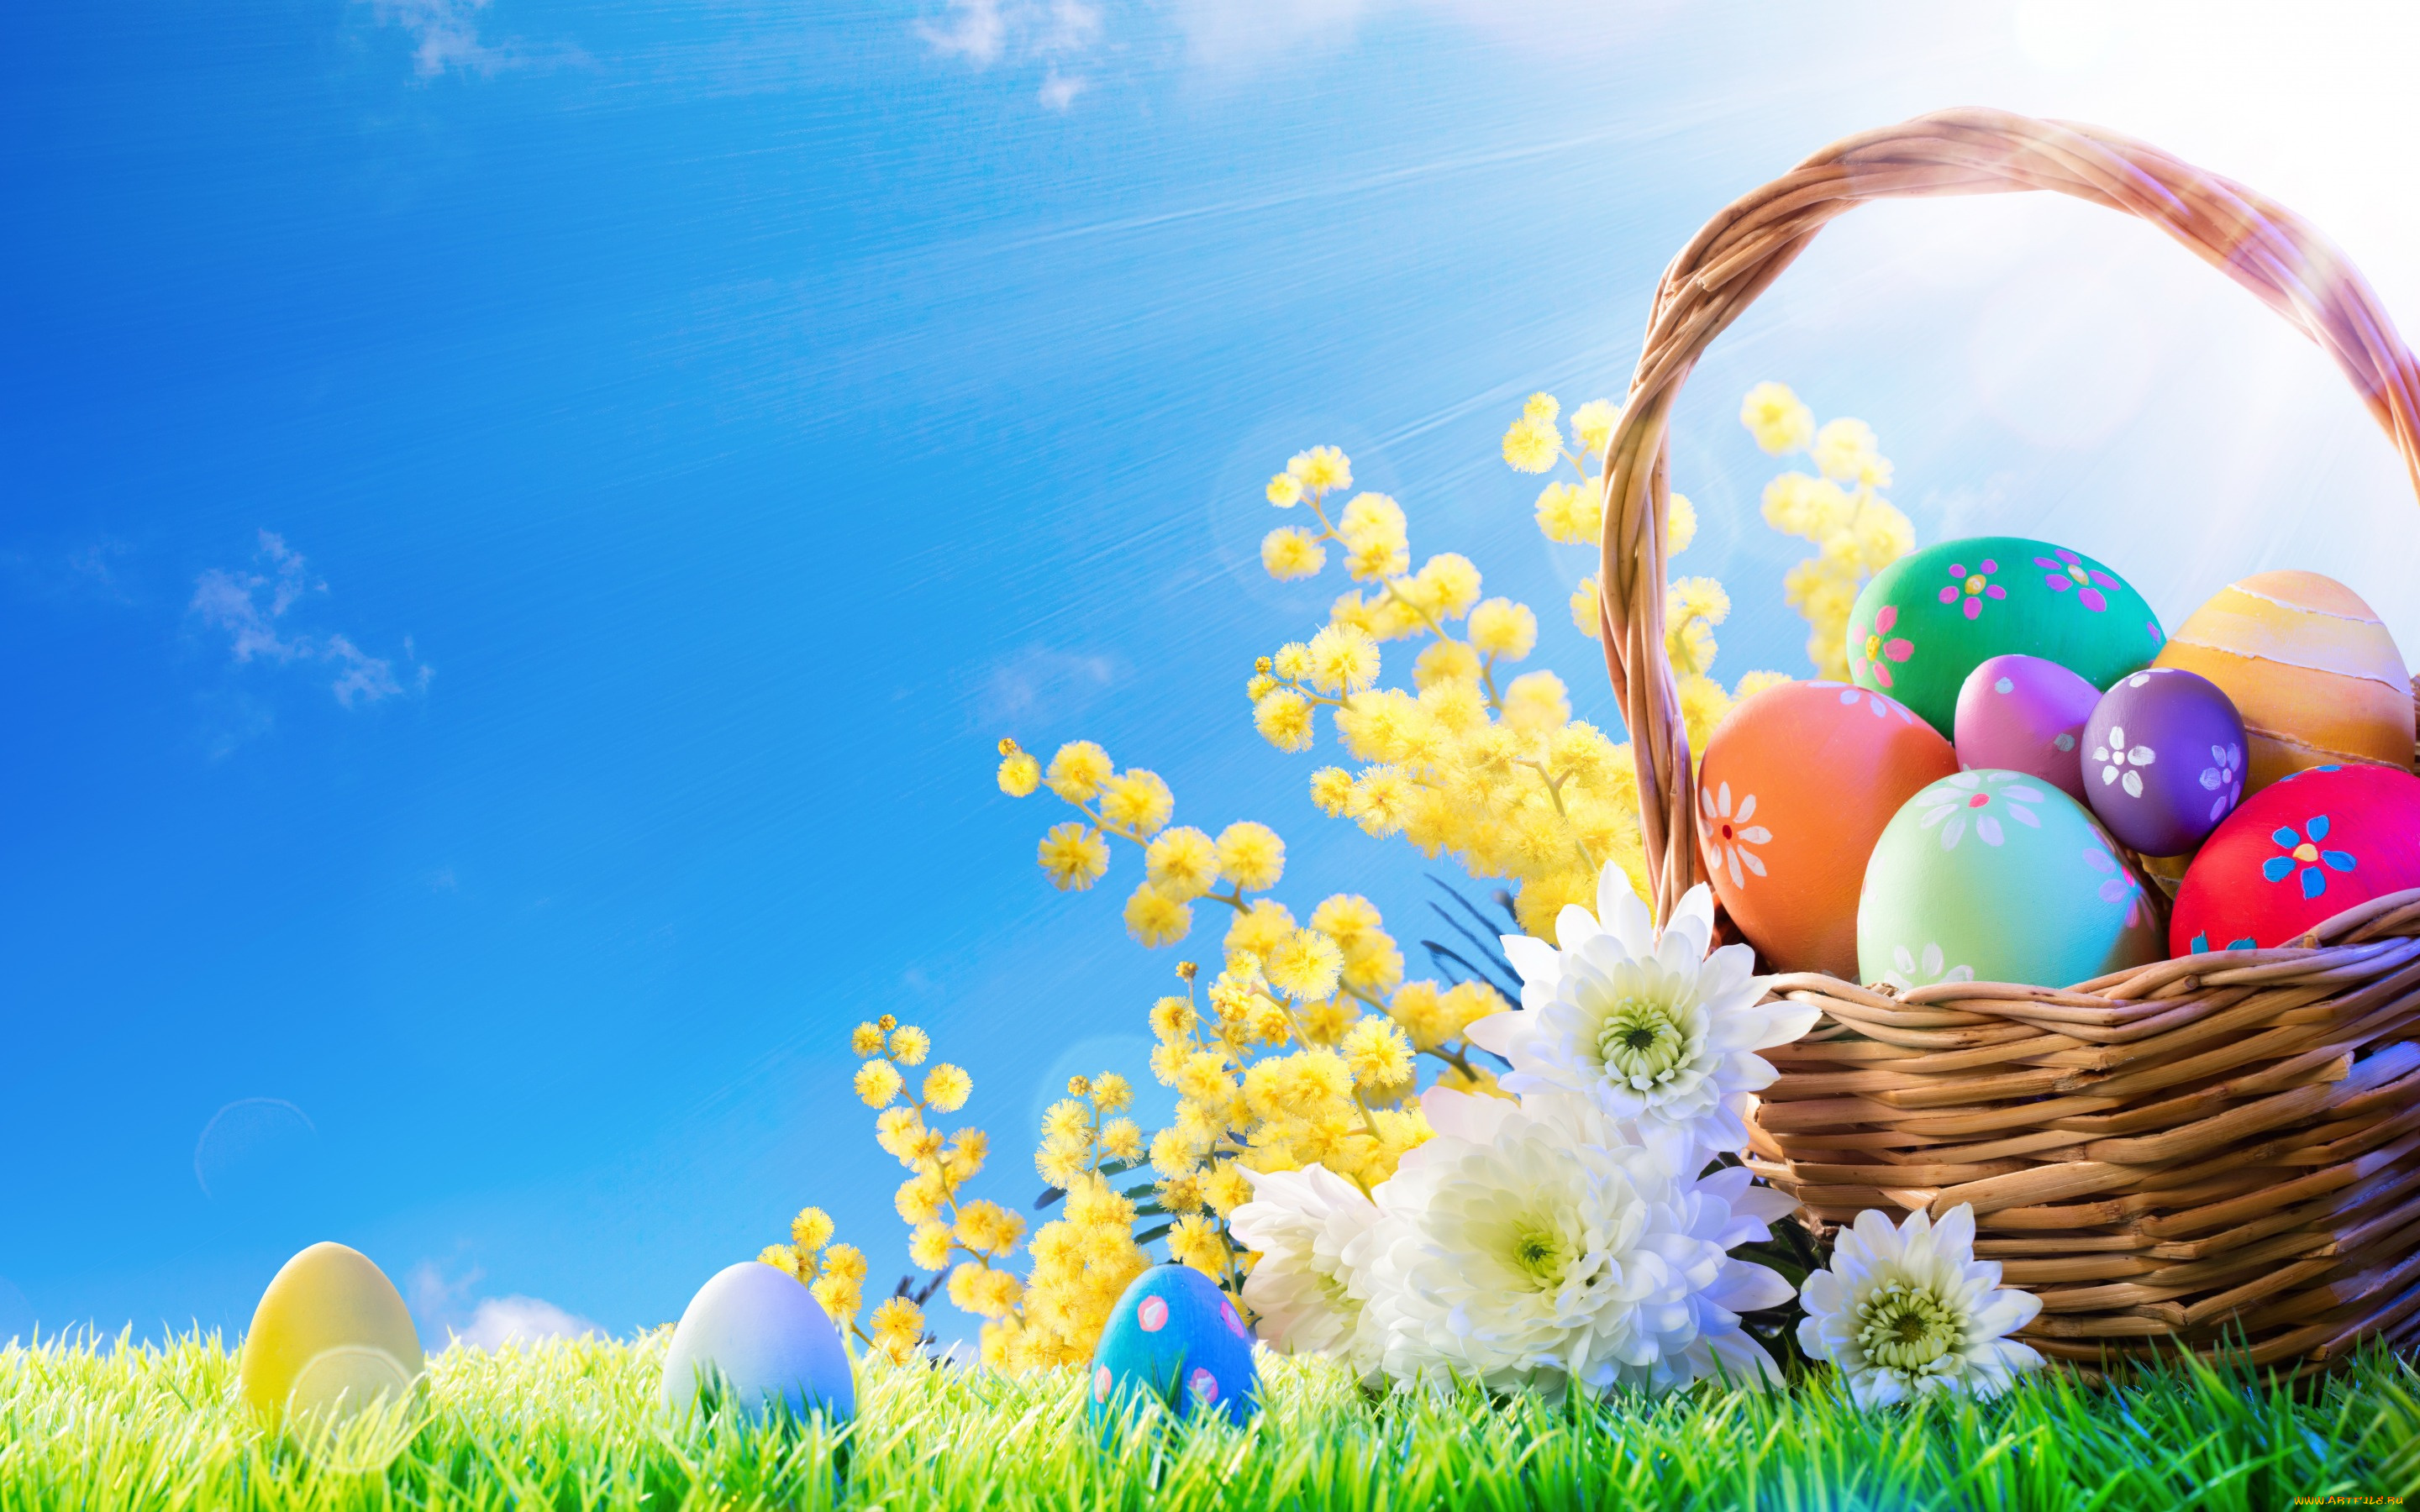 праздничные, пасха, весна, корзина, decoration, easter, трава, солнце, flowers, яйца, крашеные, eggs, spring, happy, цветы